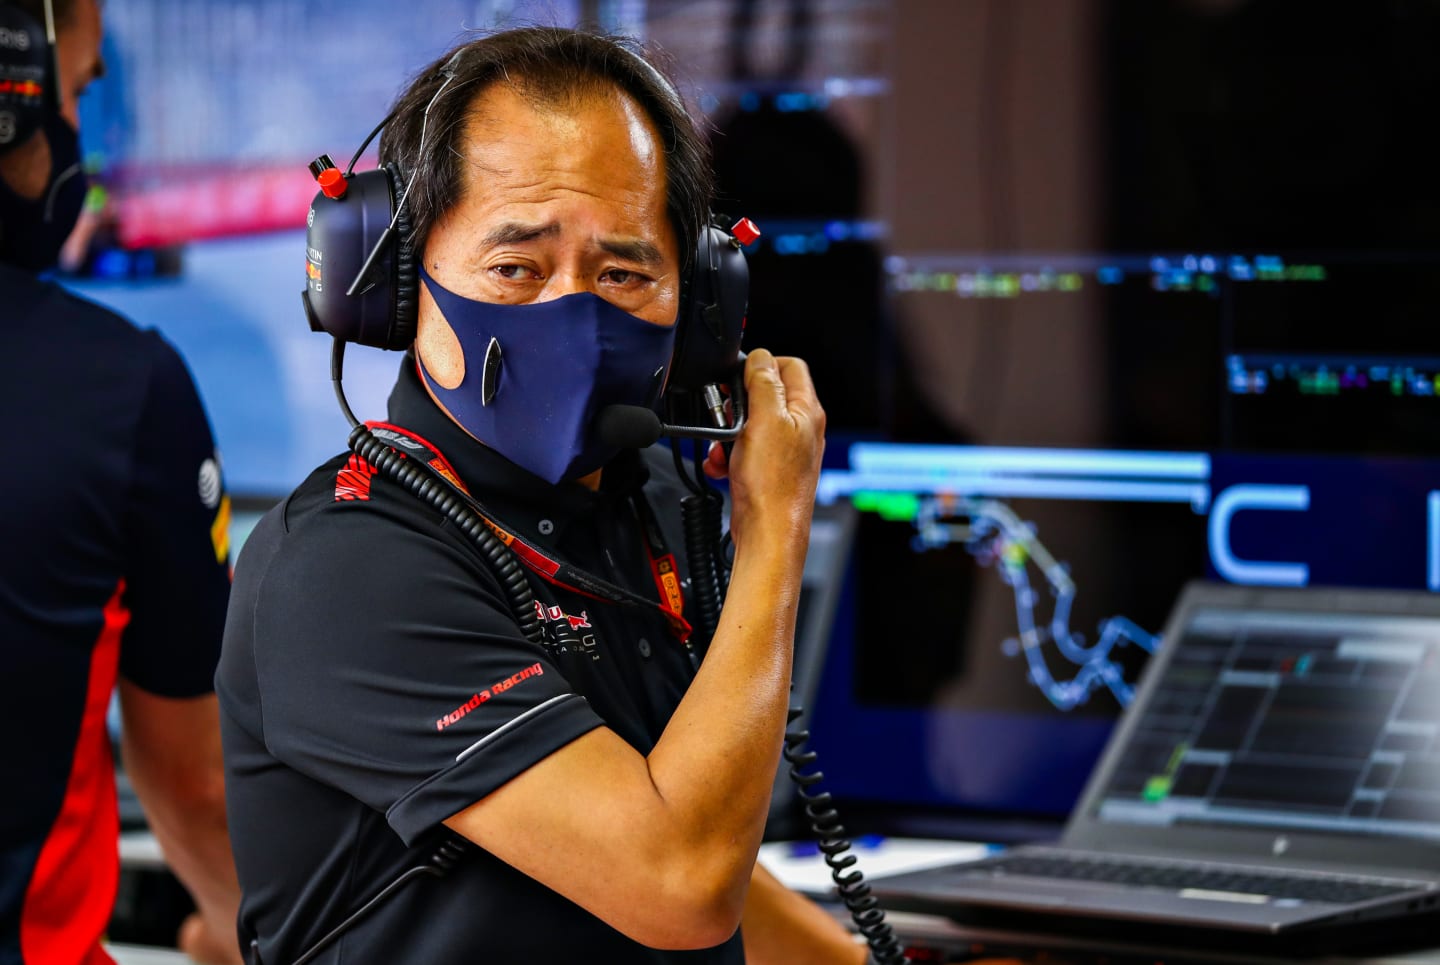 SOCHI, RUSSIA - SEPTEMBER 26: Toyoharu Tanabe of Honda looks on in the Red Bull Racing garage